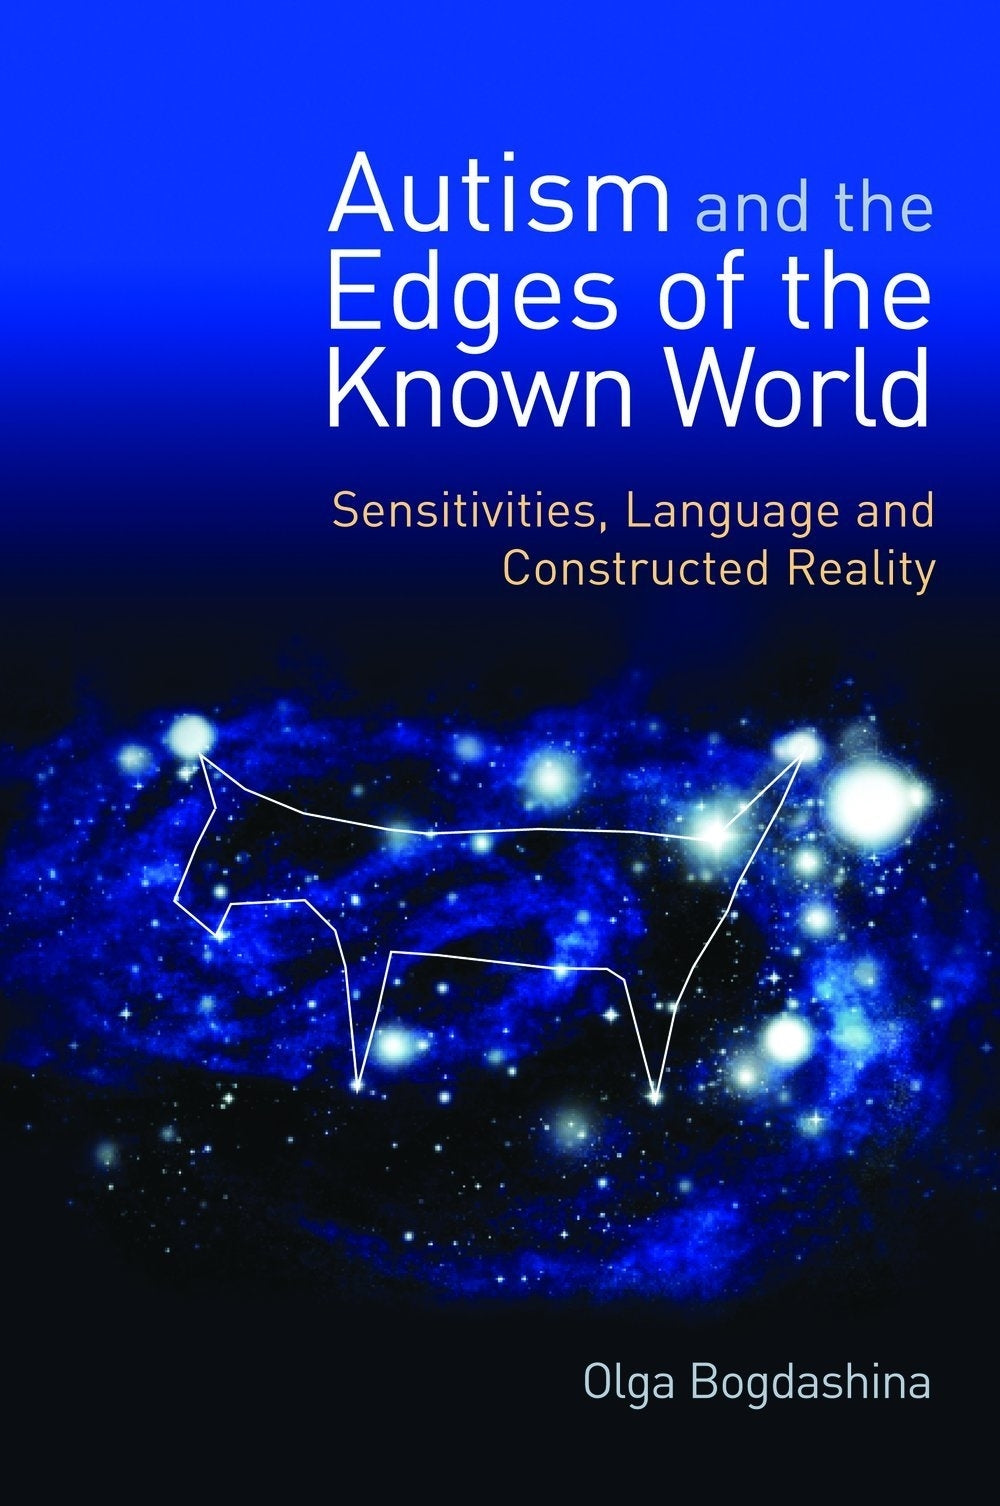 Autism and the Edges of the Known World by Theo Peeters, Kazik Hubert, Olga Bogdashina